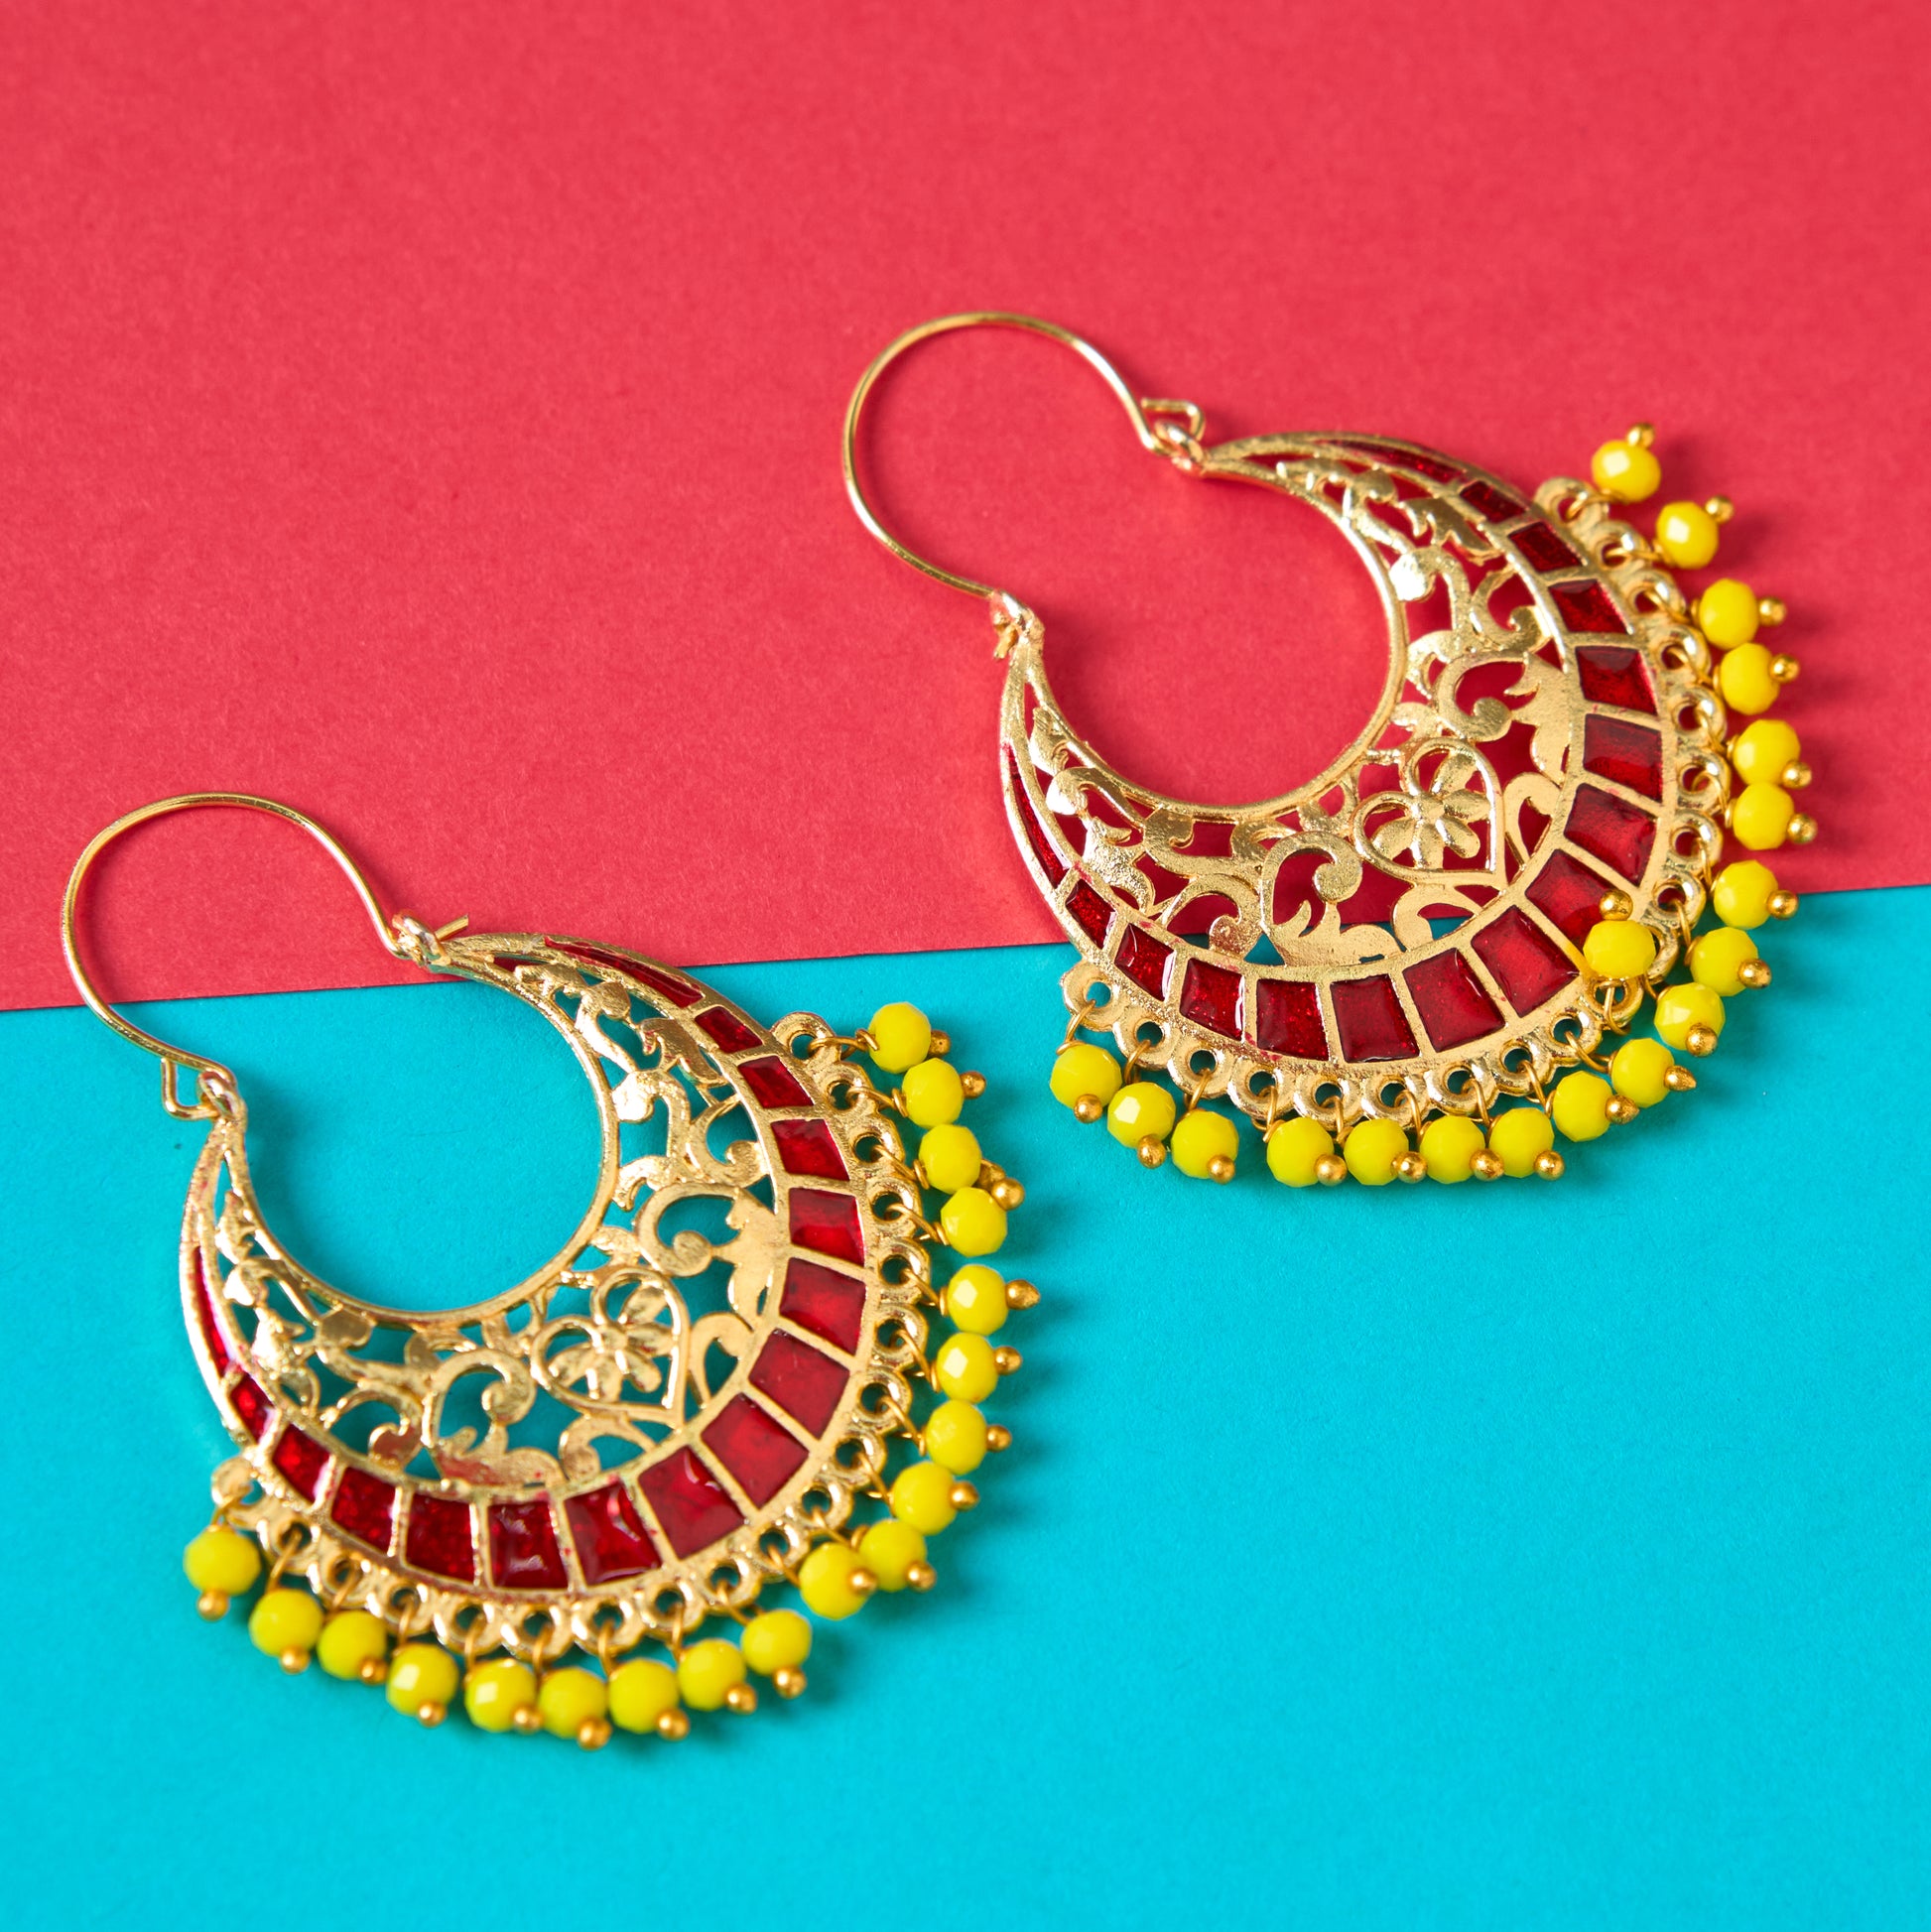 Moonstruck Traditional Indian Gold Plated Alloy Chandbali Hoop Earrings for Women (Maroon) - www.MoonstruckINC.com